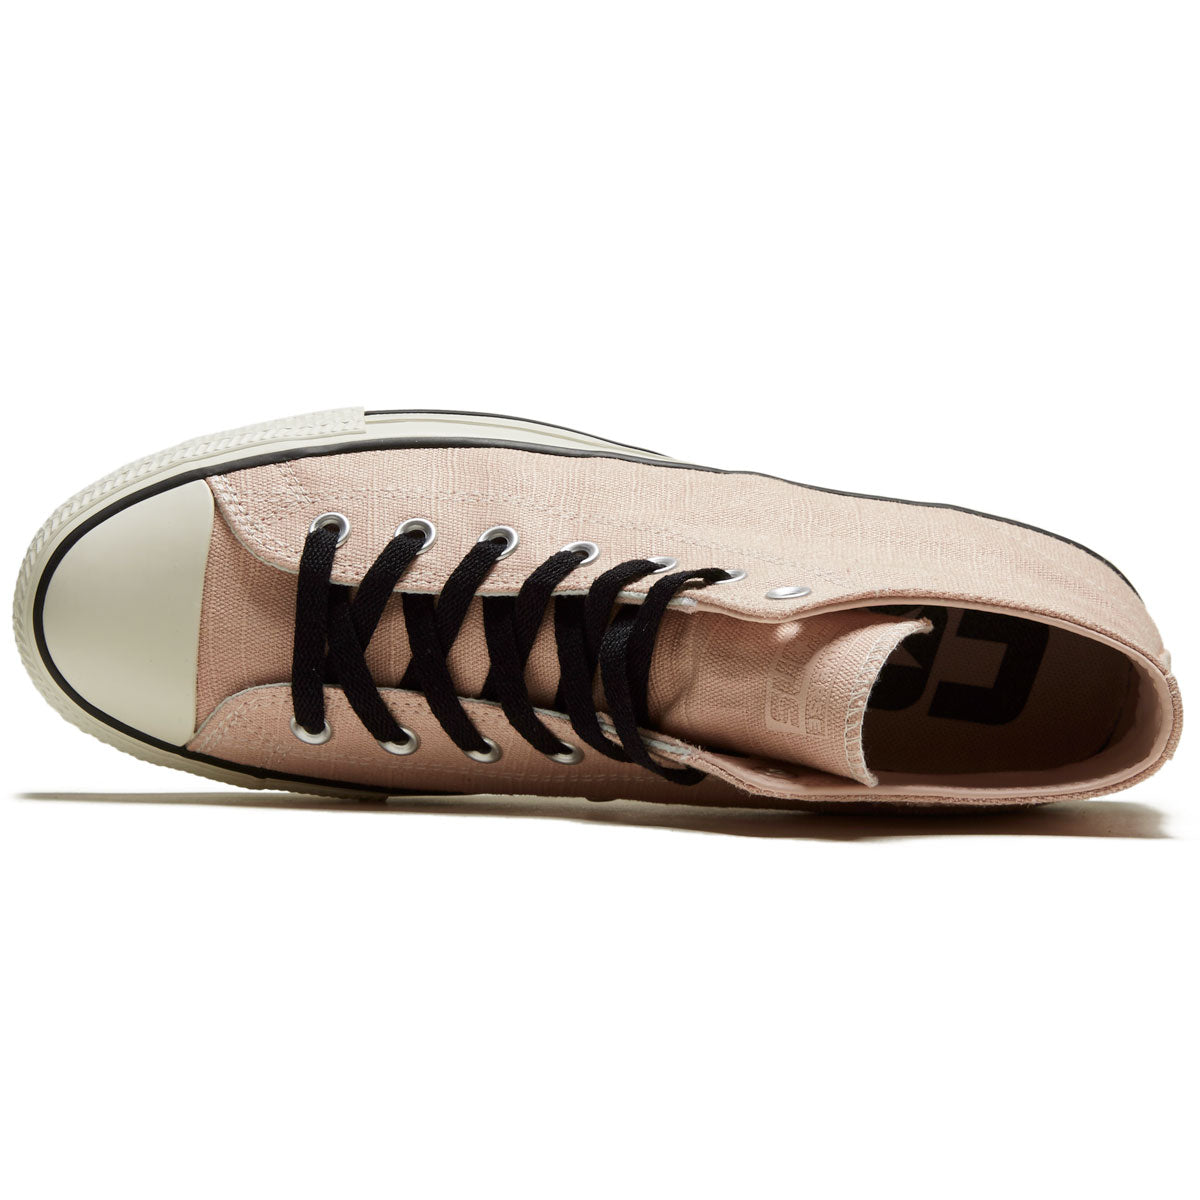 Converse Chuck Taylor All Star Pro Hemp Mid Shoes - Pink Sage/Egret/Black image 3